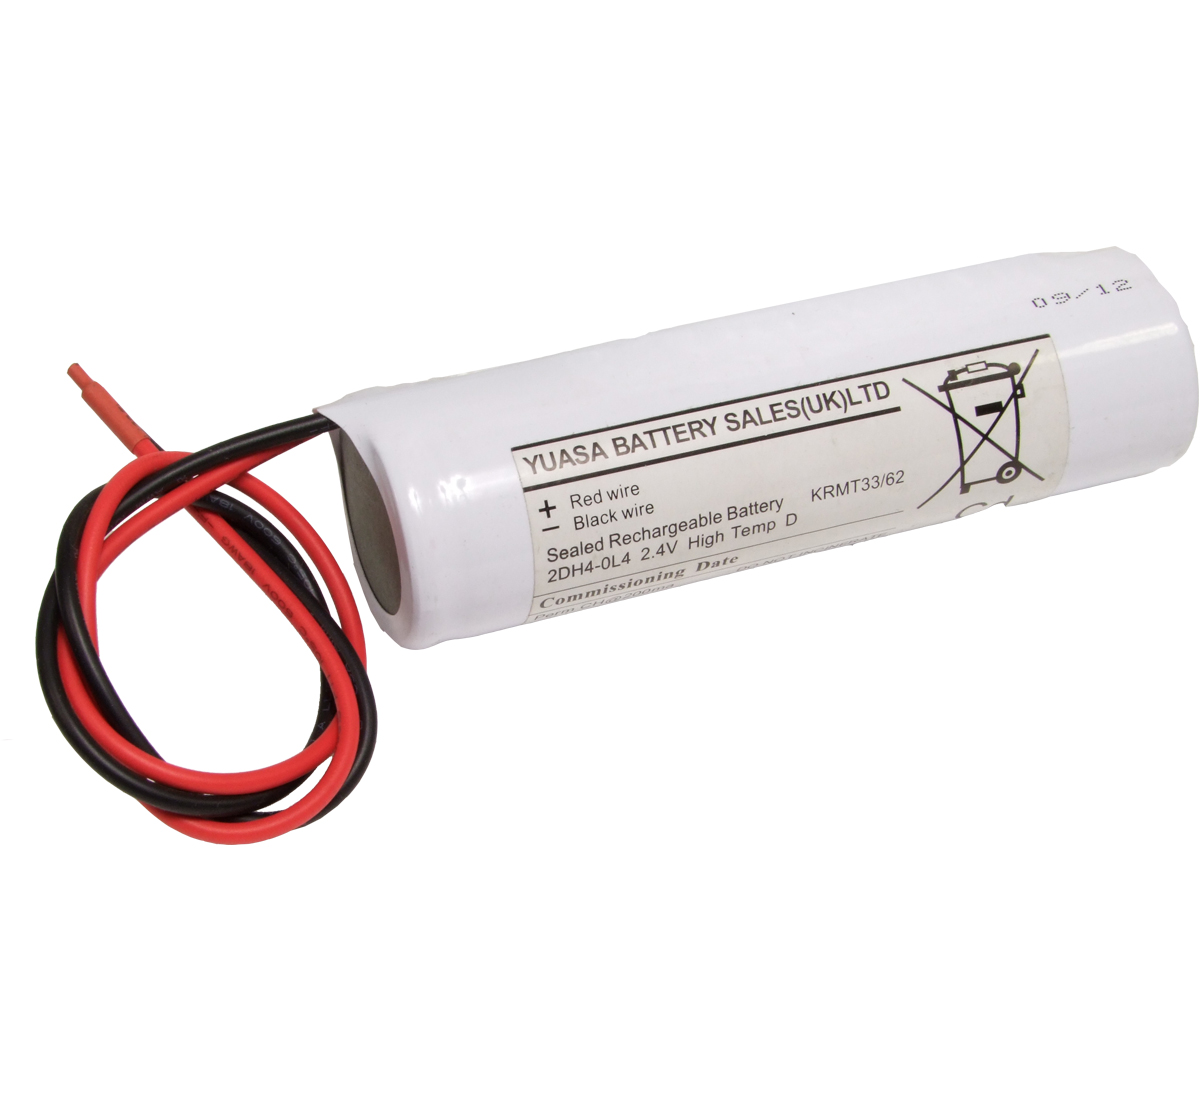 Yuasa 2DH4.0L4 Emergency Lighting Battery